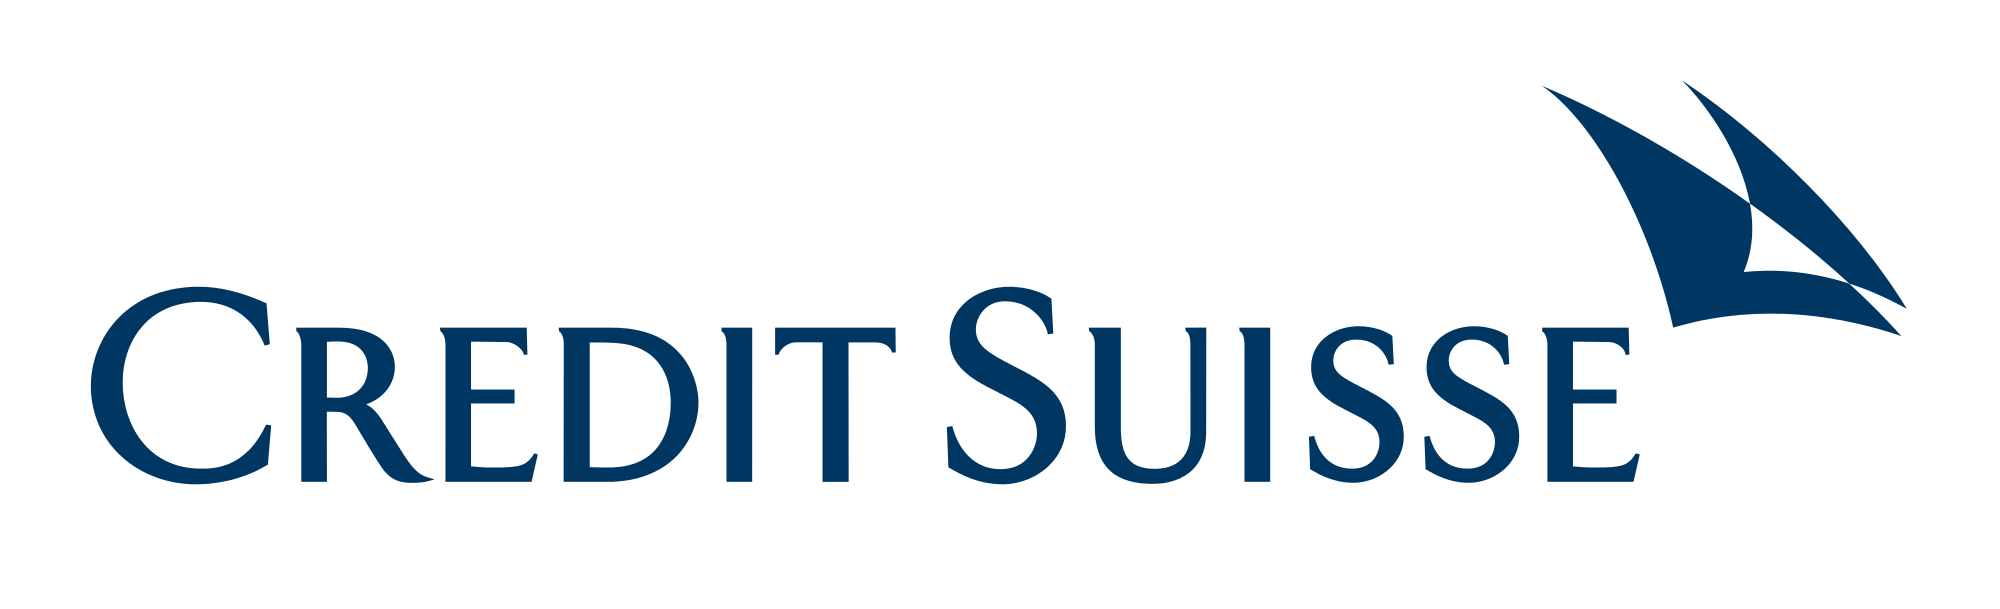 Credit Suisse Logo - Credit Suisse Logo